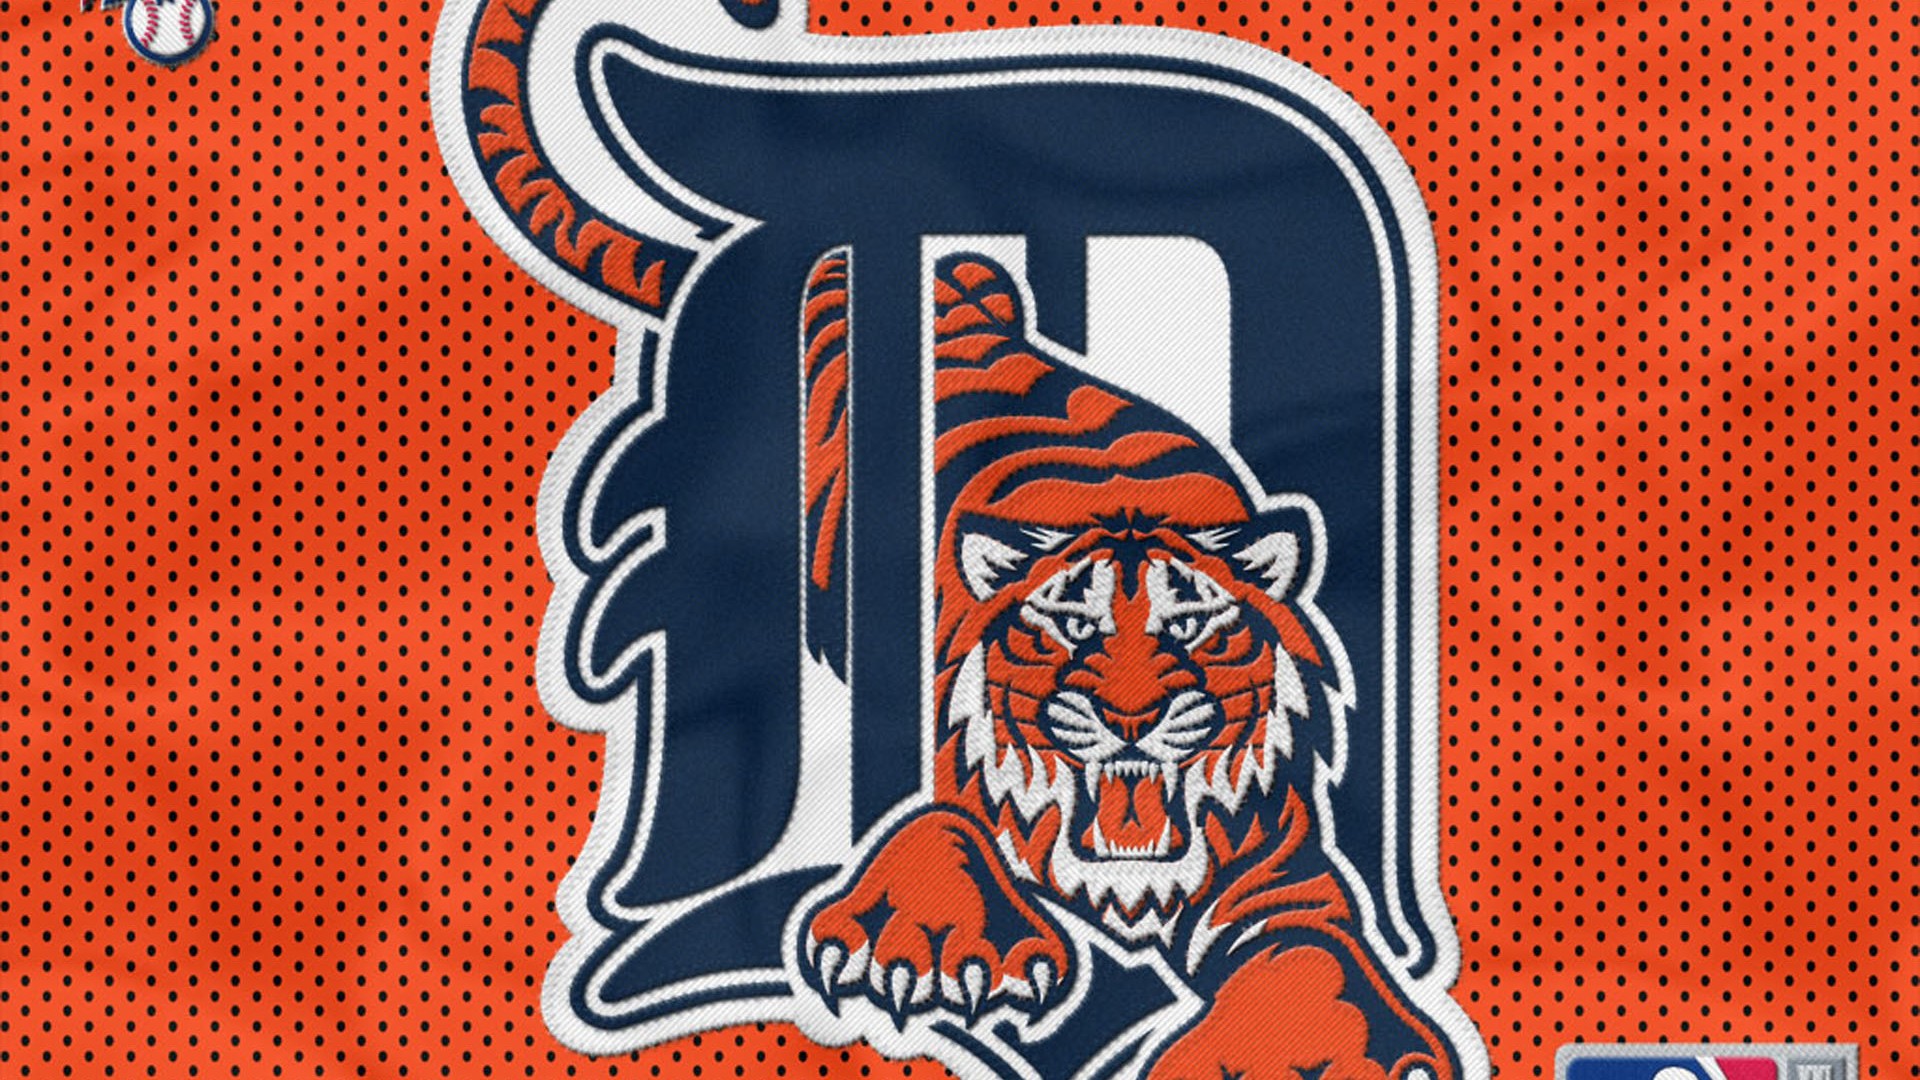 Detroit Tigers Iphone wallpaper   1148452